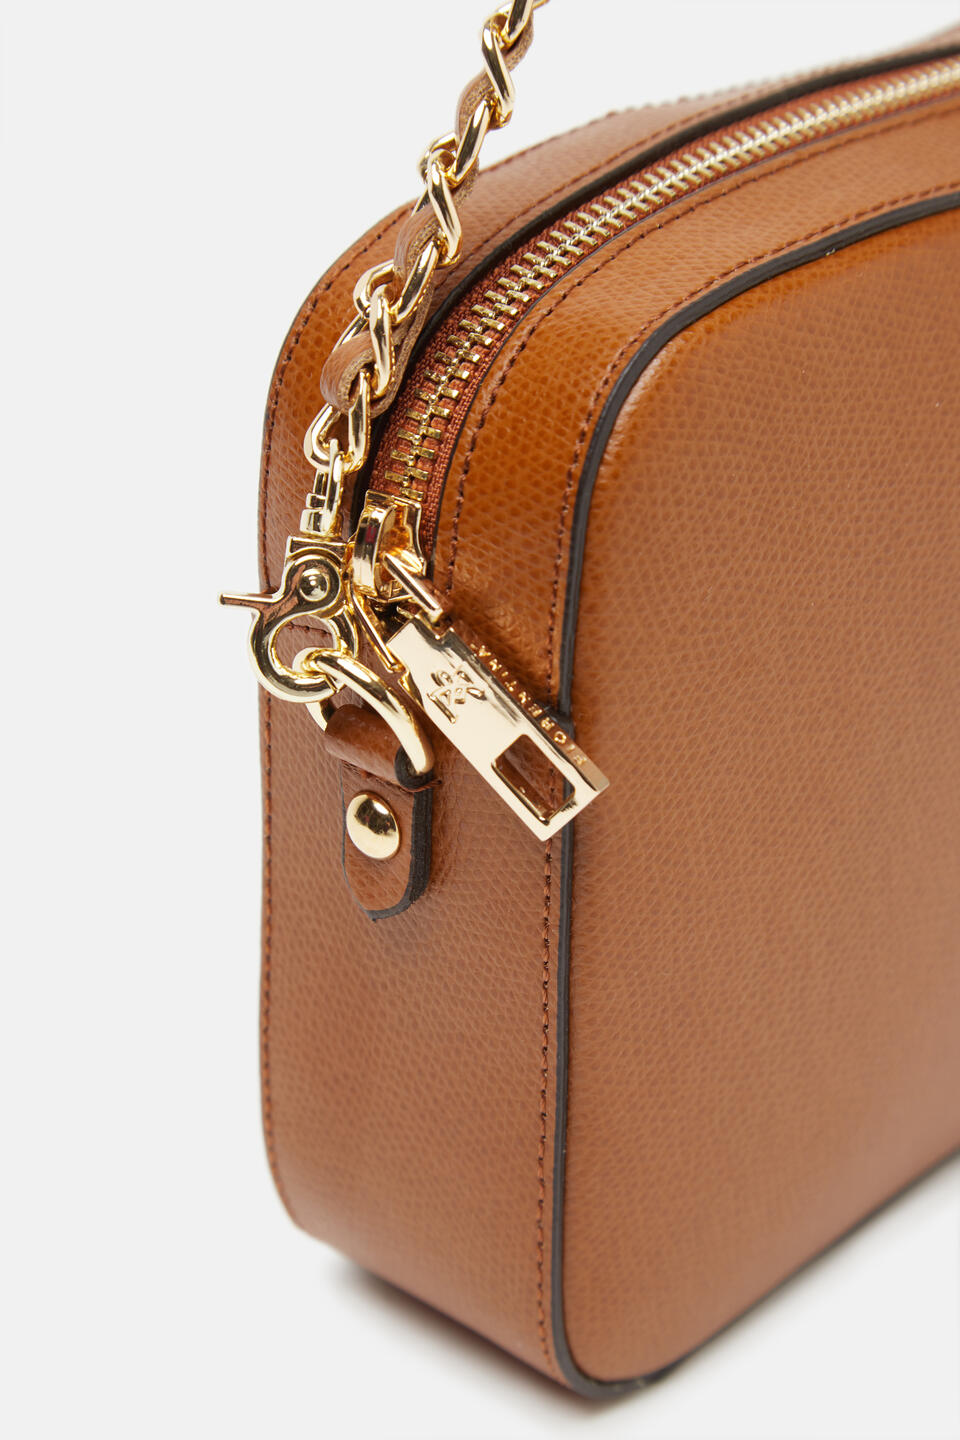 Clutch bag with shoulder straps - Women Bestseller | Bestseller LION - Women Bestseller | BestsellerCuoieria Fiorentina